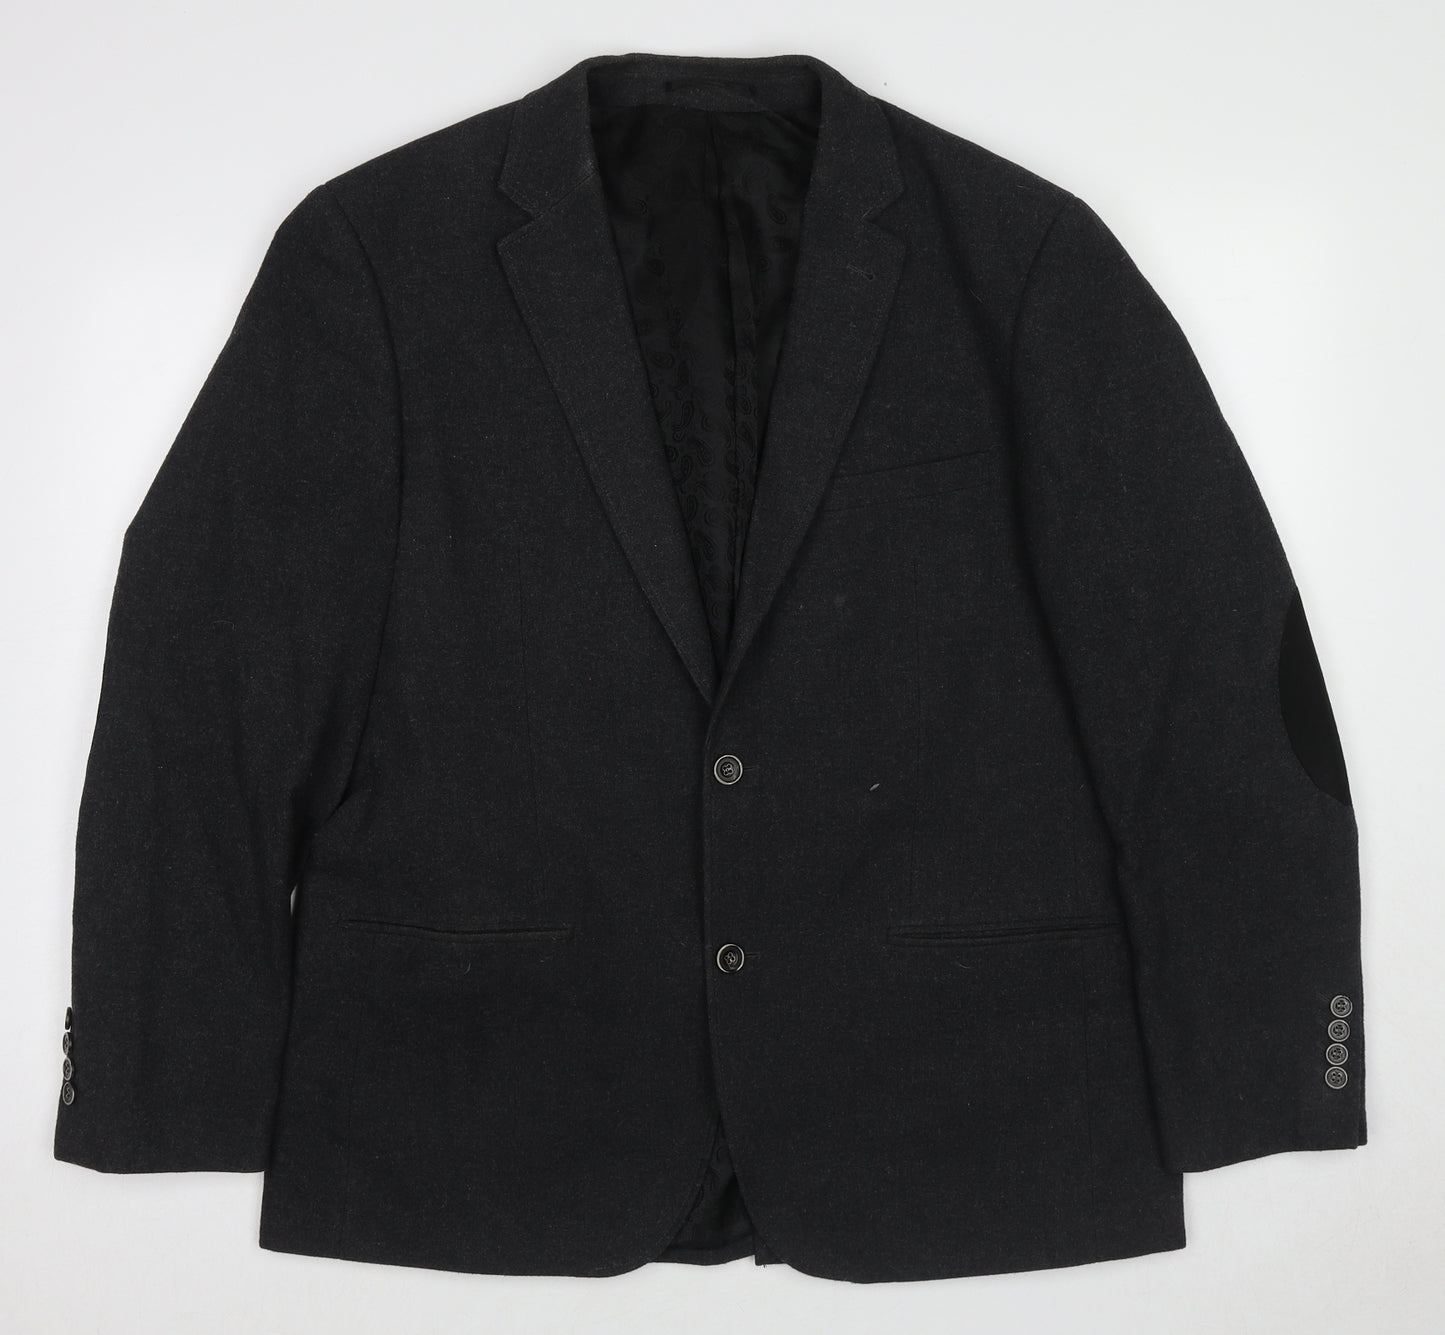 Aspen & Court Mens Black Wool Jacket Suit Jacket Size 44 Regular - Elbow Patches